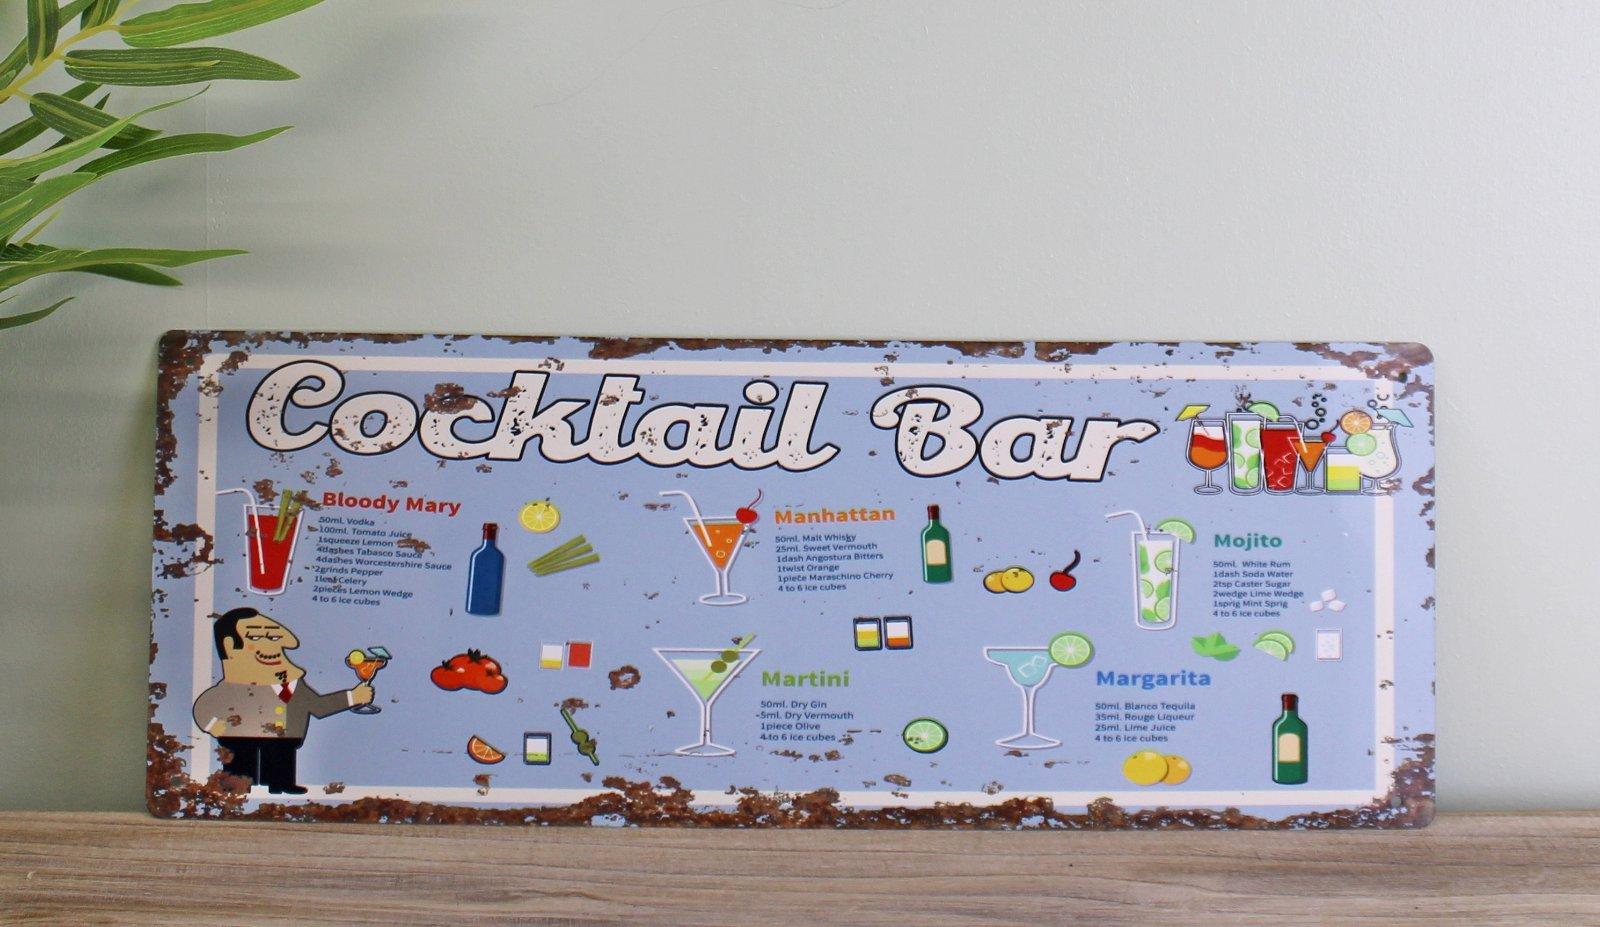 View Vintage Metal Sign Cocktail Bar information